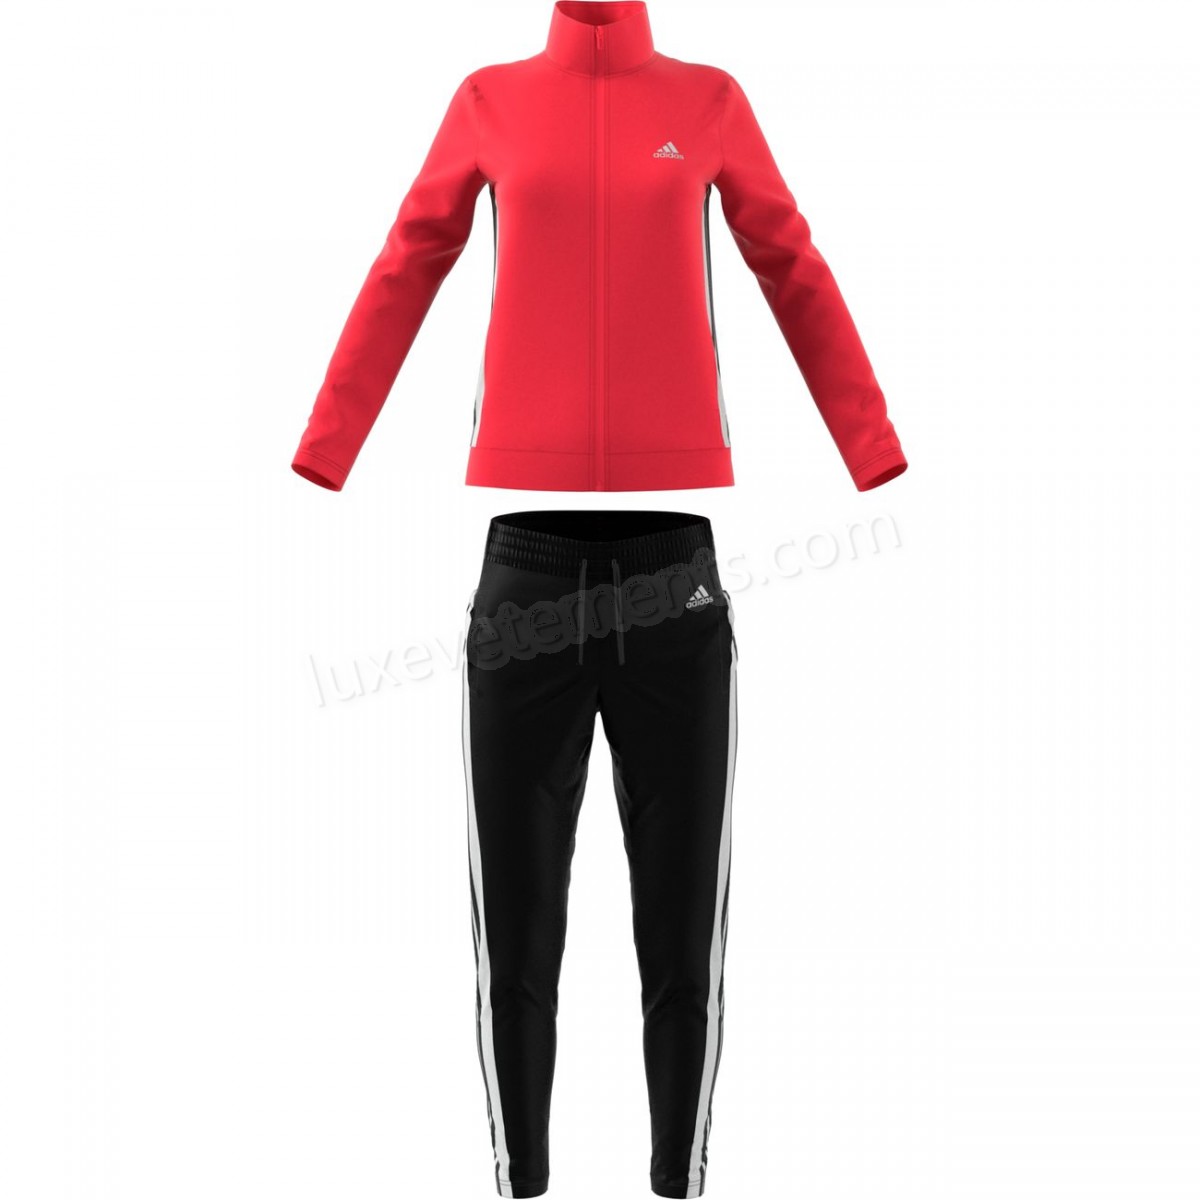 Adidas-Fitness femme ADIDAS Survêtement femme adidas Team Sports Vente en ligne - -3